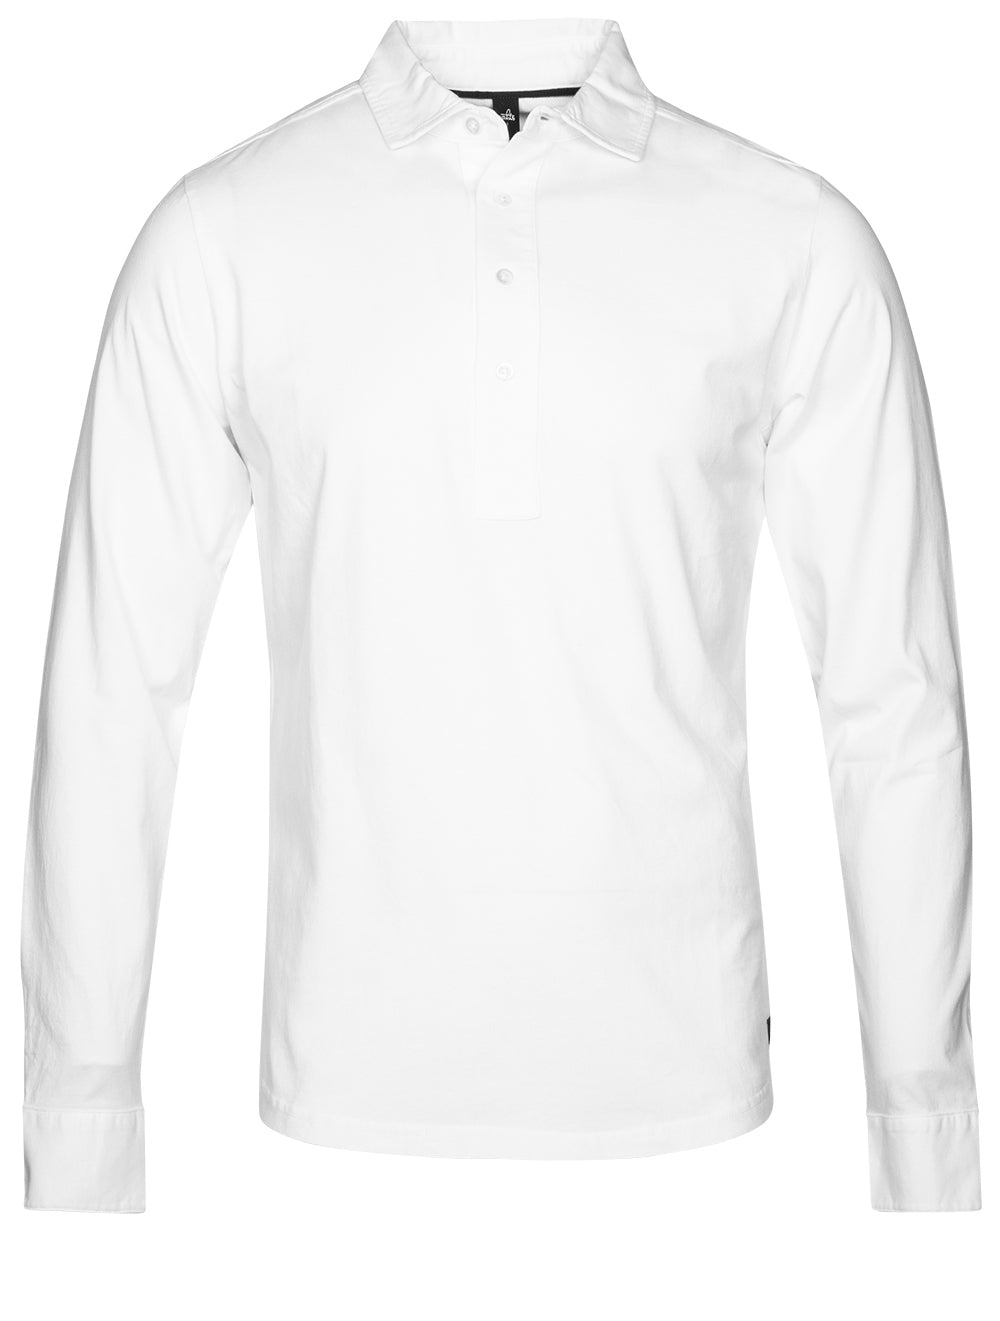 WAHTS Tailored Jersey Poloshirt White